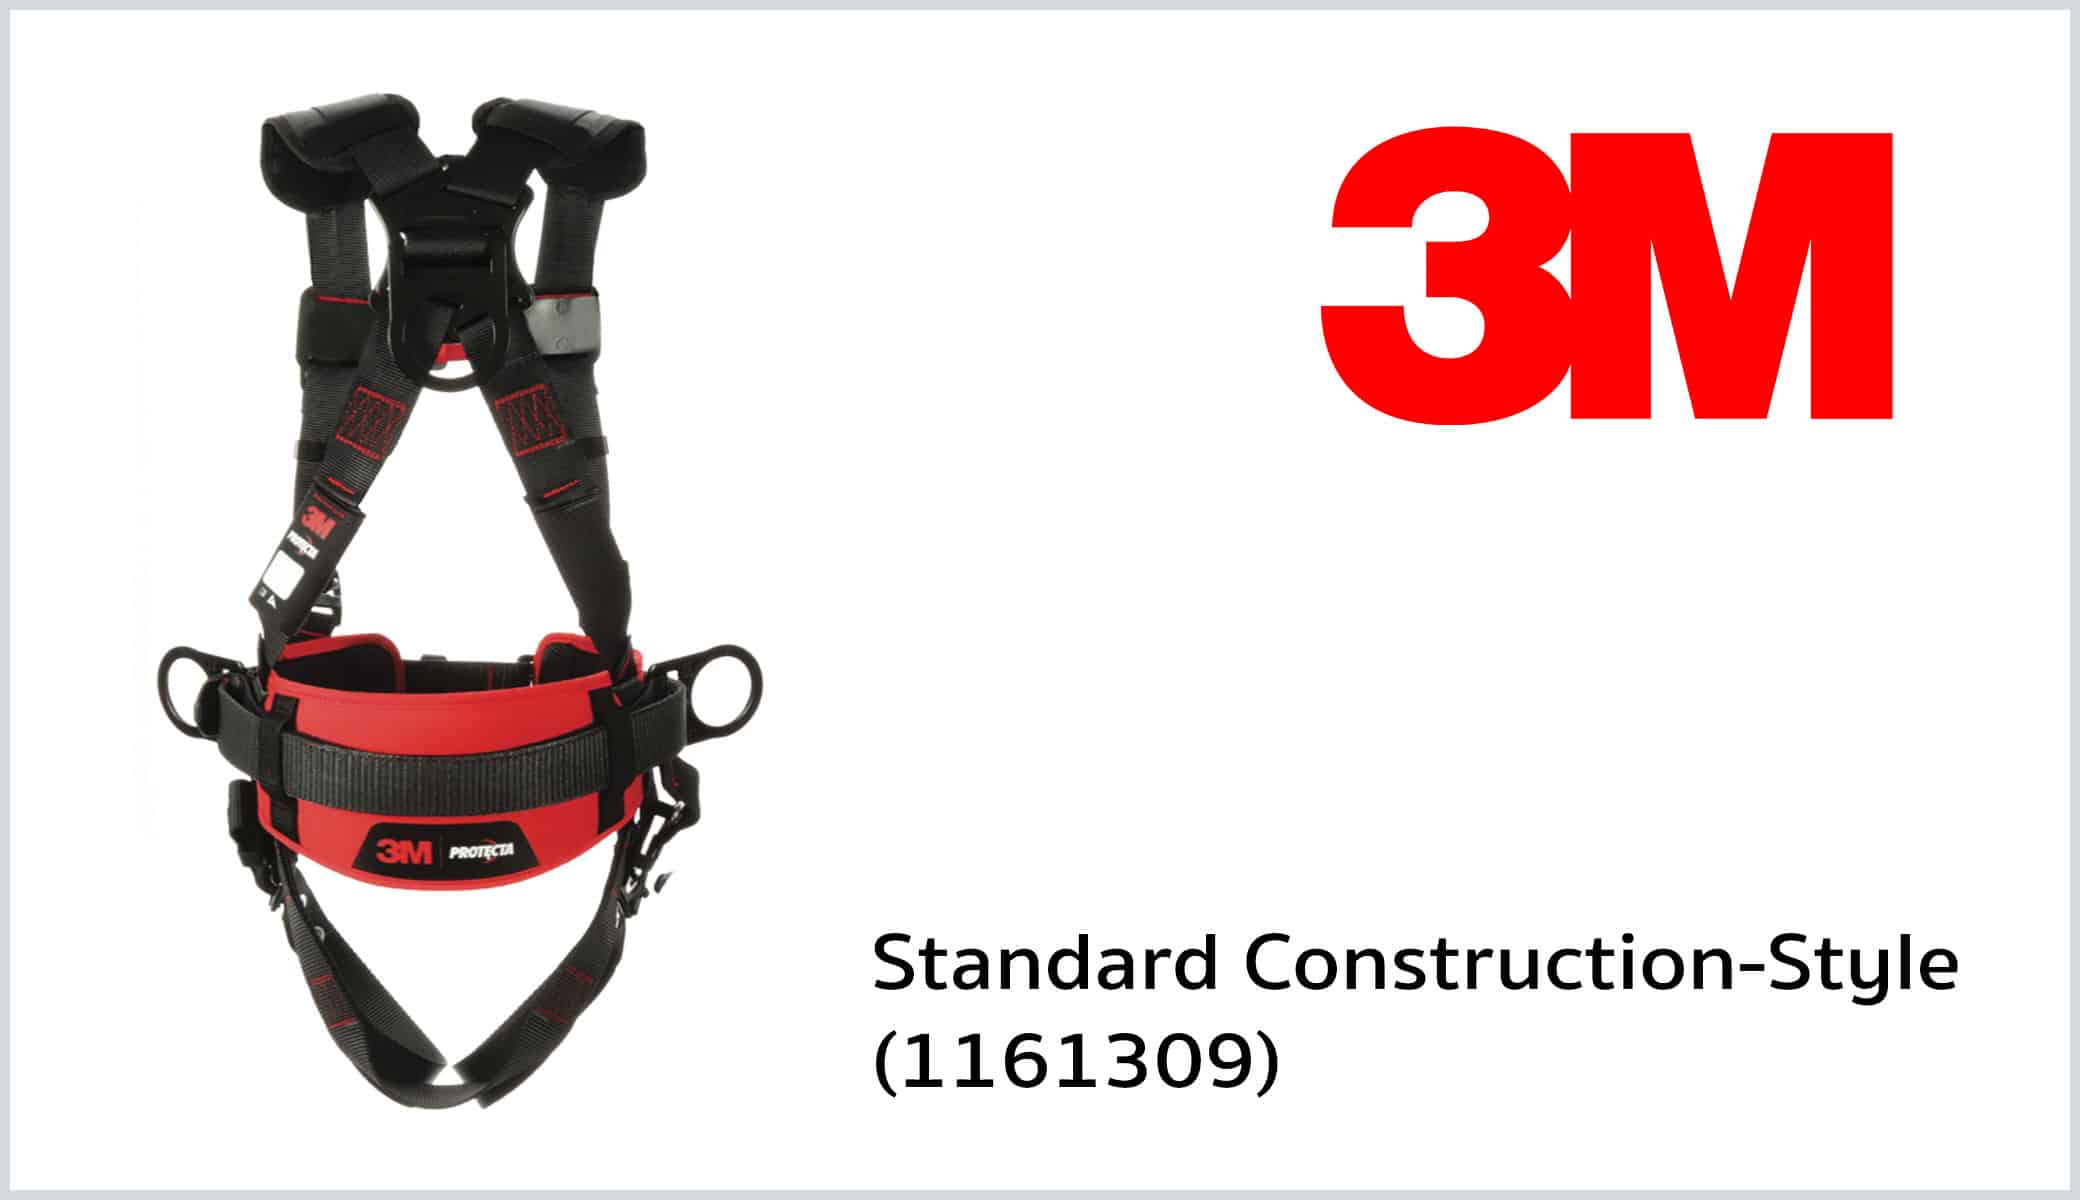 Standard Construction-Style (1161309)